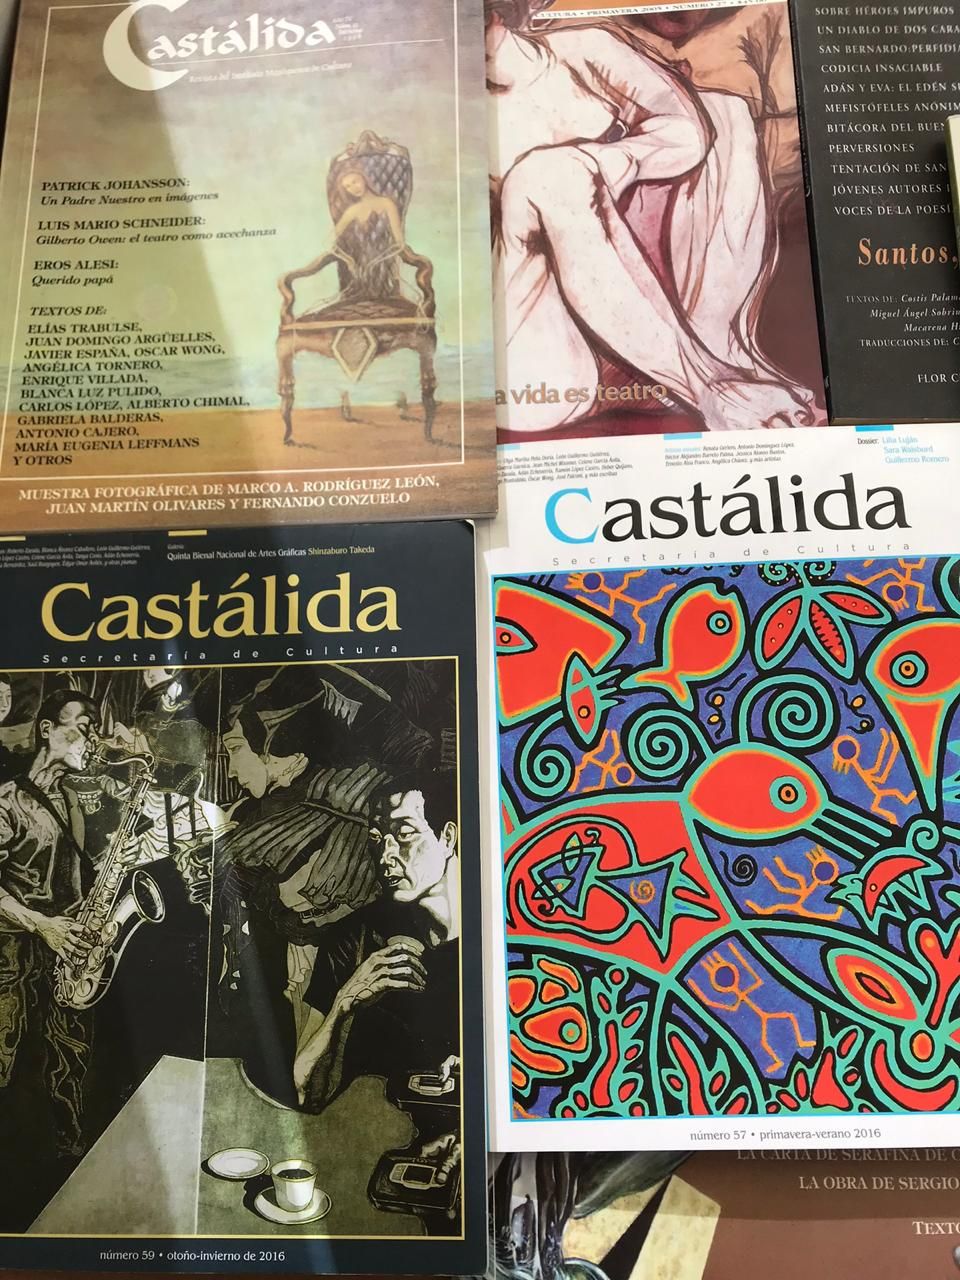 Emiten convocatoria para colaborar en la revista "Castalida"